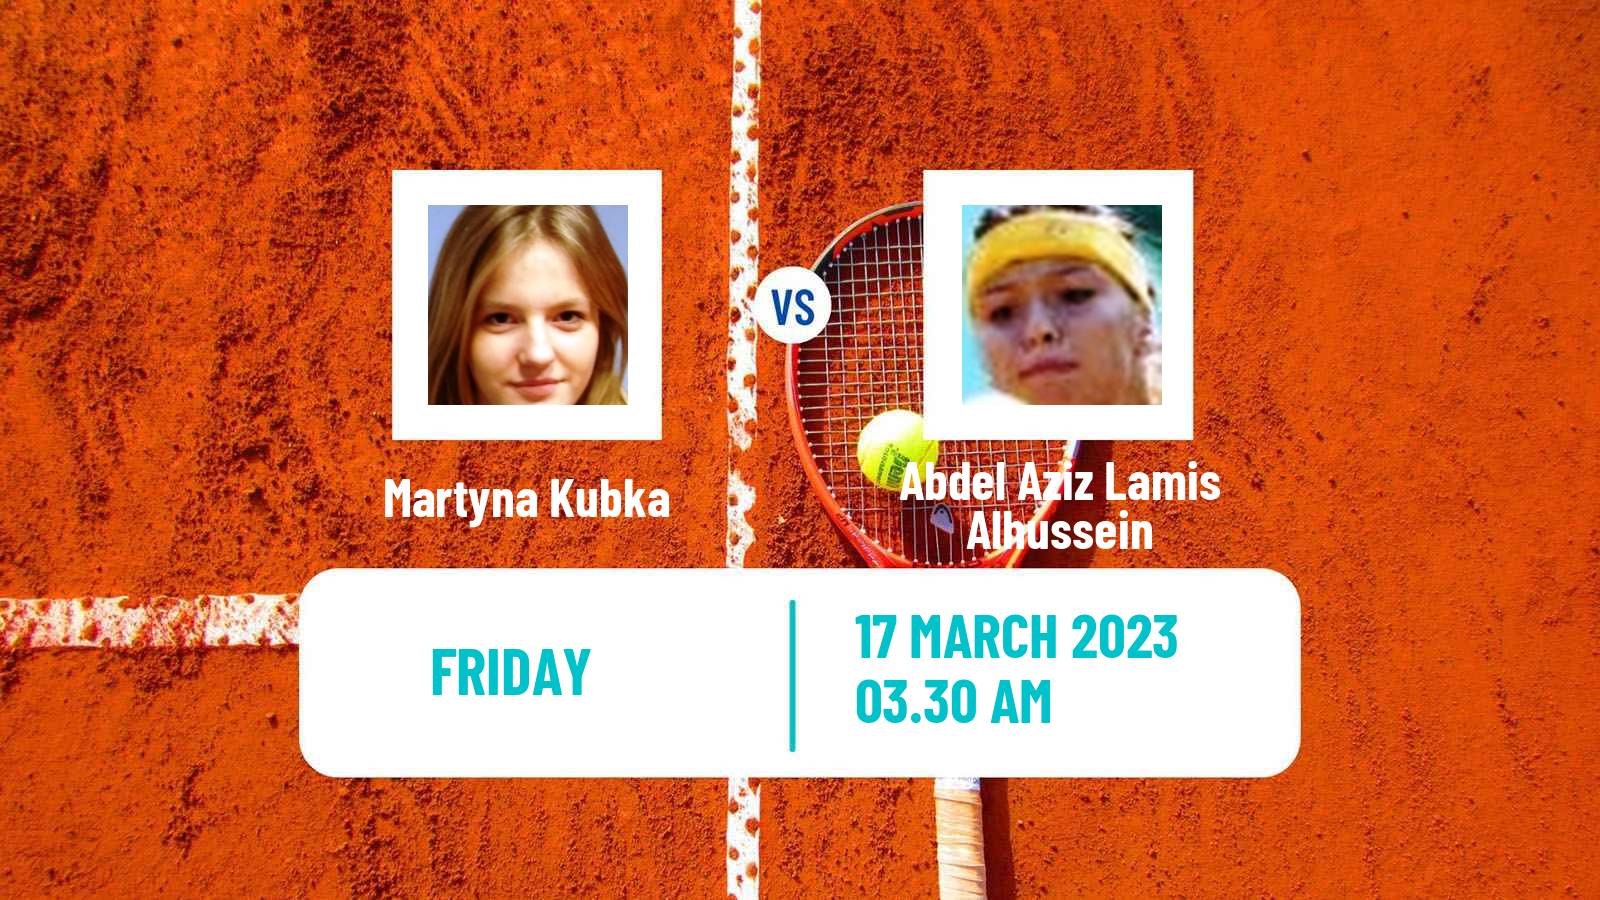 Tennis ITF Tournaments Martyna Kubka - Abdel Aziz Lamis Alhussein